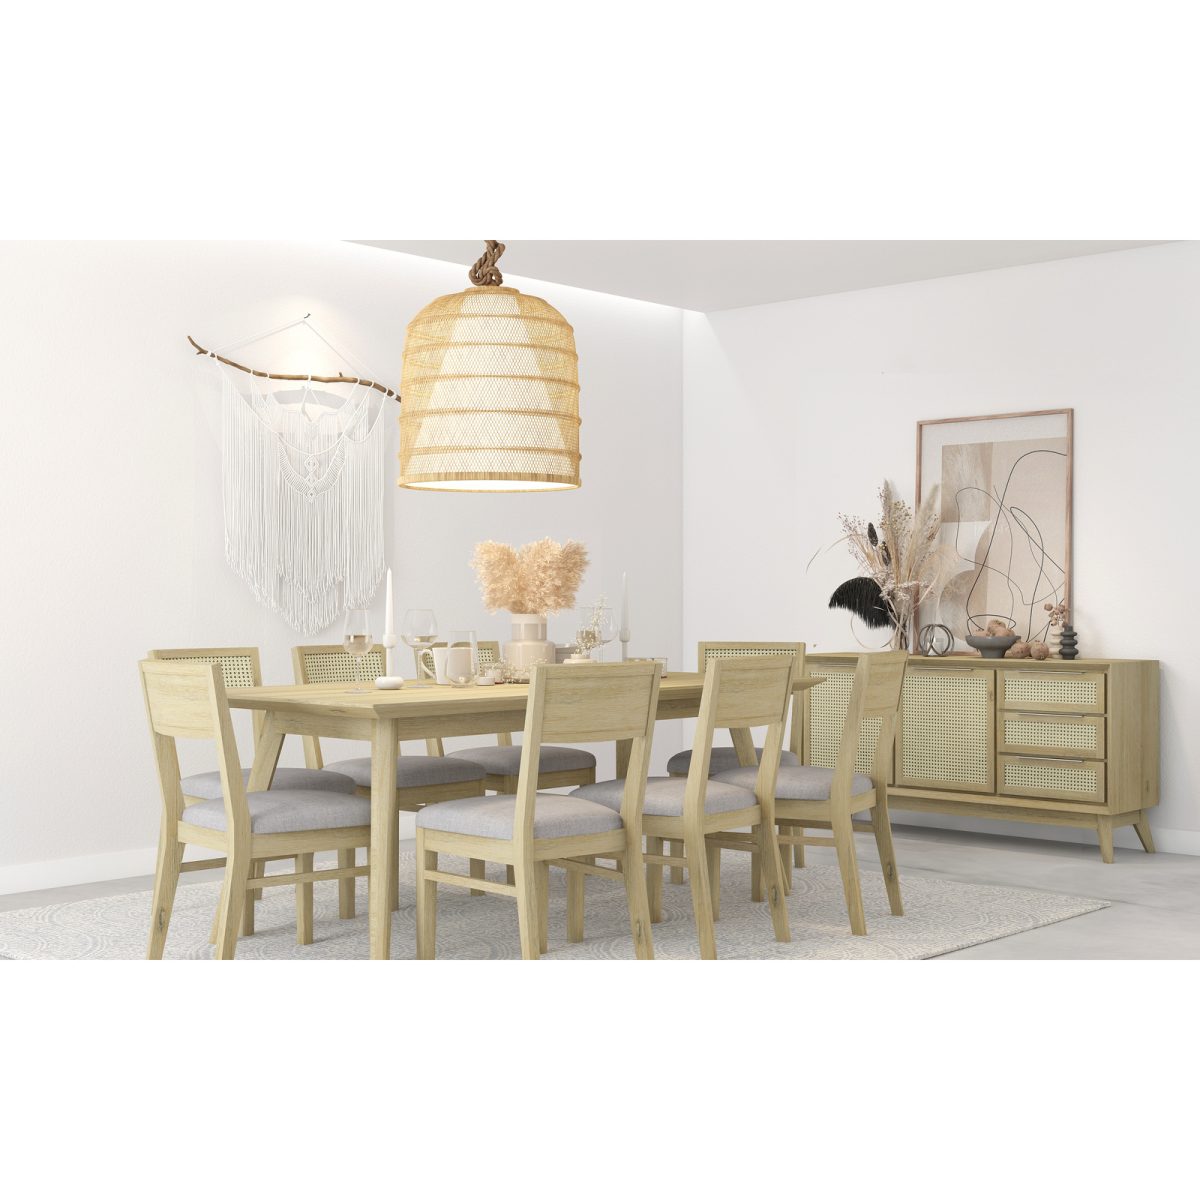 Grevillea Buffet Table 160cm 2 Door Solid Acacia Wood Rattan Furniture – Brown